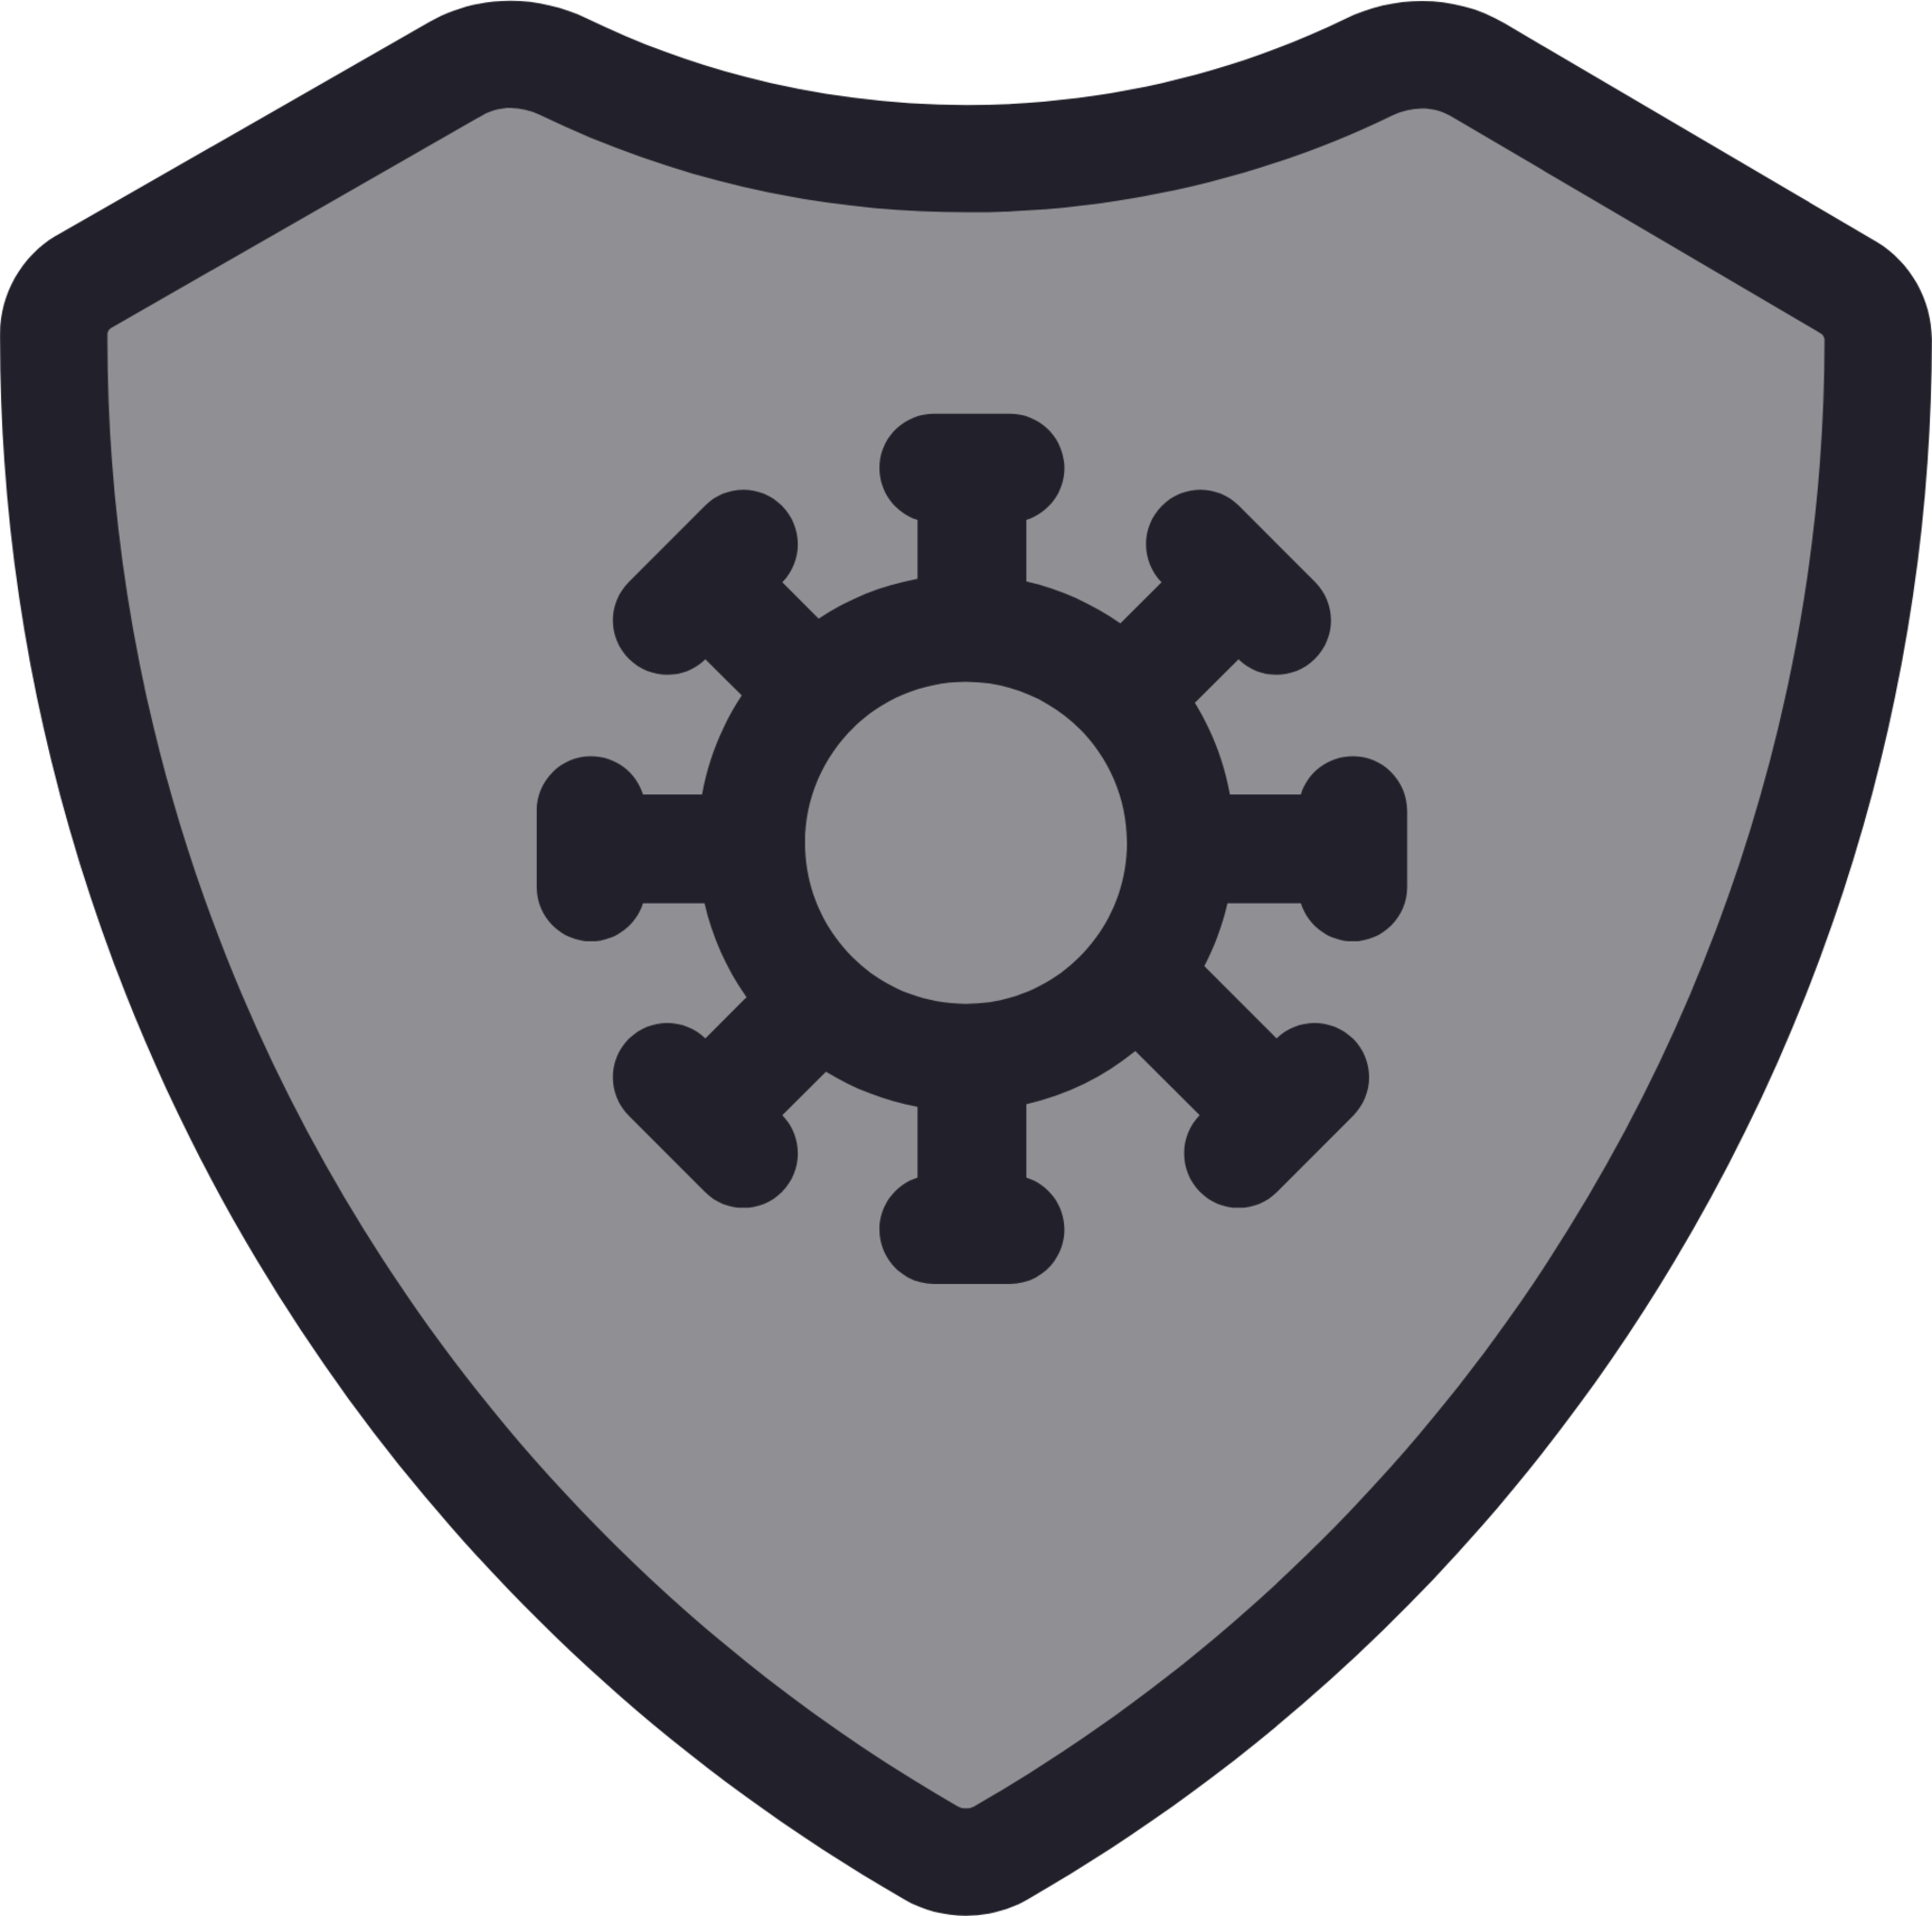 Shield Virus icon